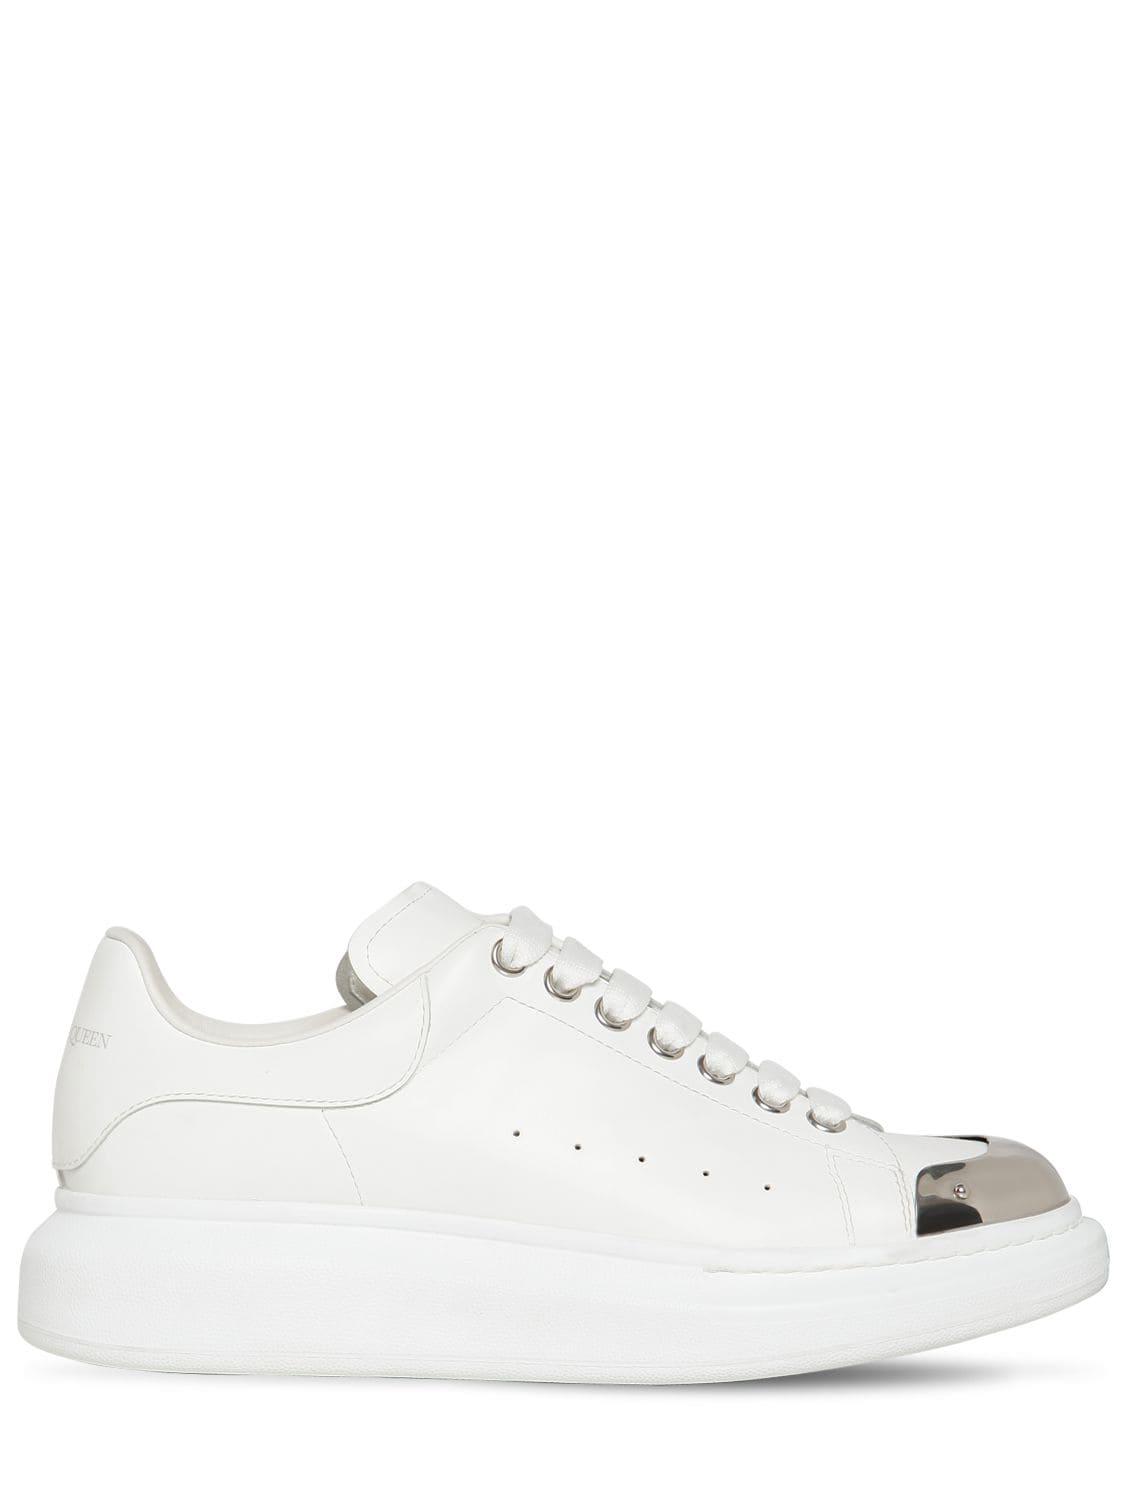 Alexander McQueen 45mm Leather Platform Sneakers in White for Men - Lyst